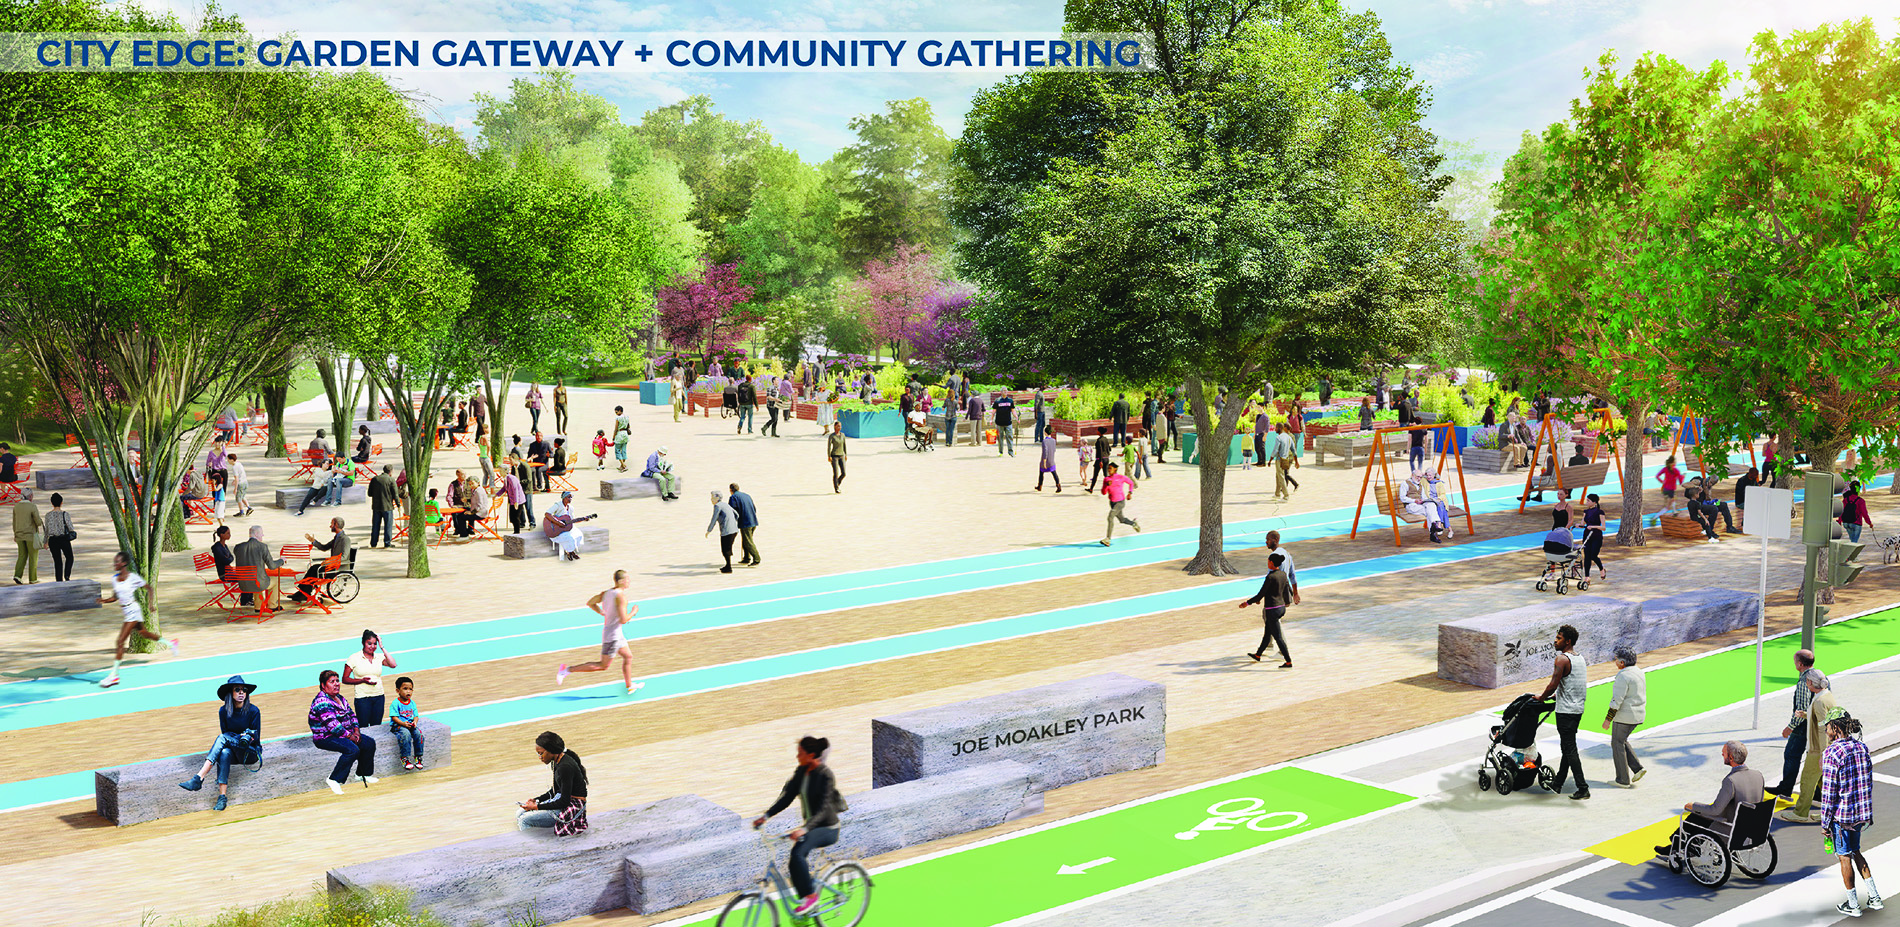 City Edge: Garden Gateway and Community Gathering